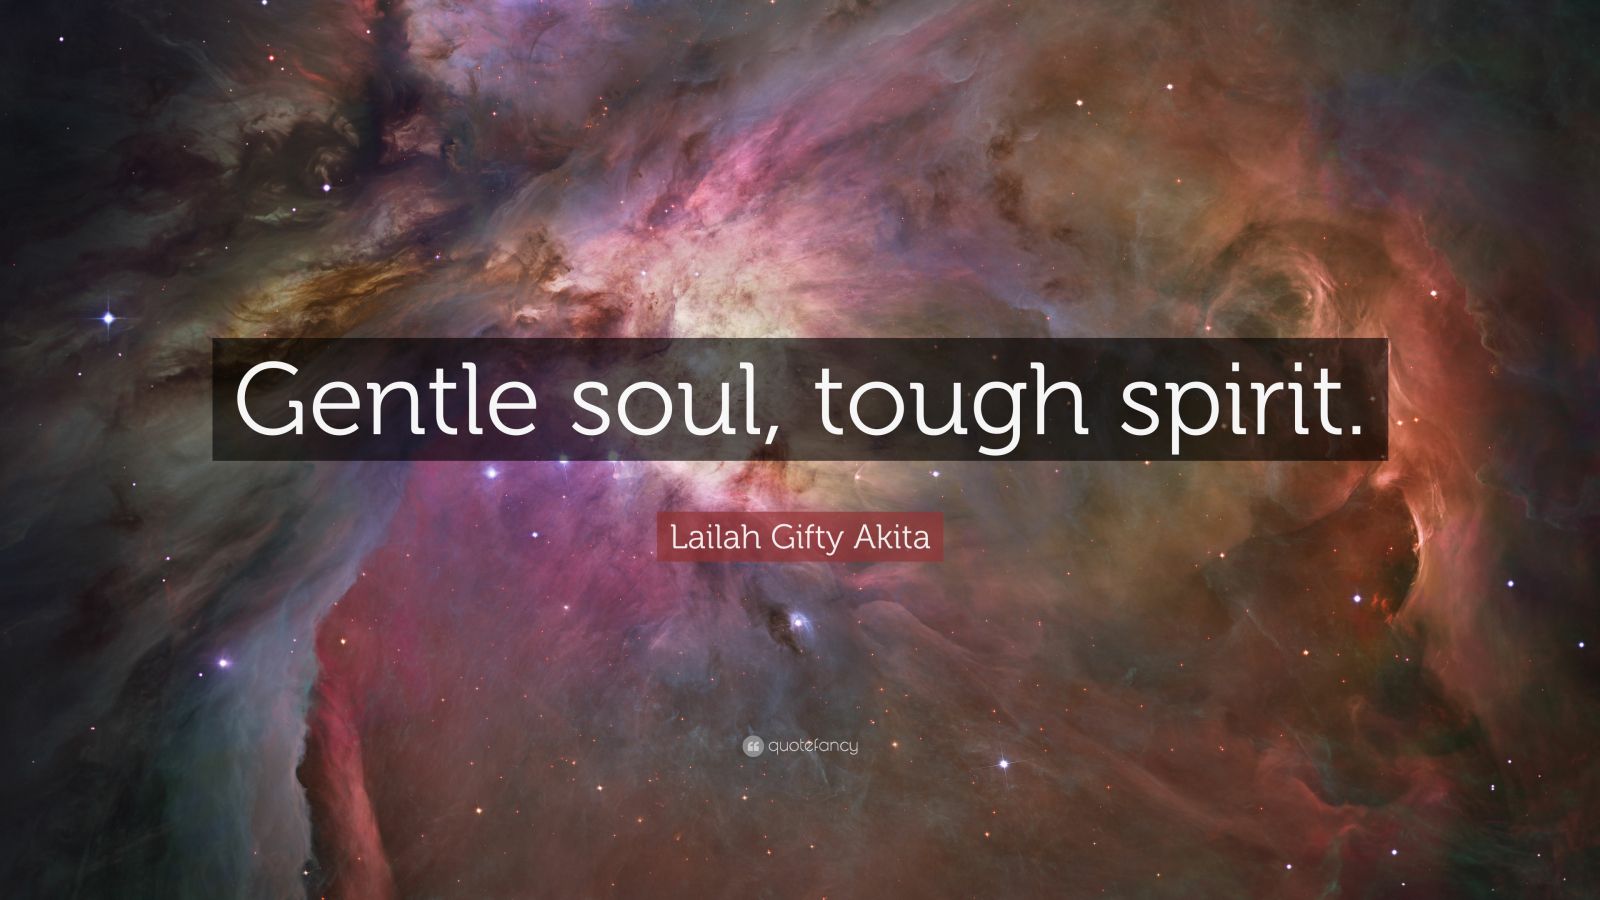 Lailah Gifty Akita Quote: “Gentle soul, tough spirit.”